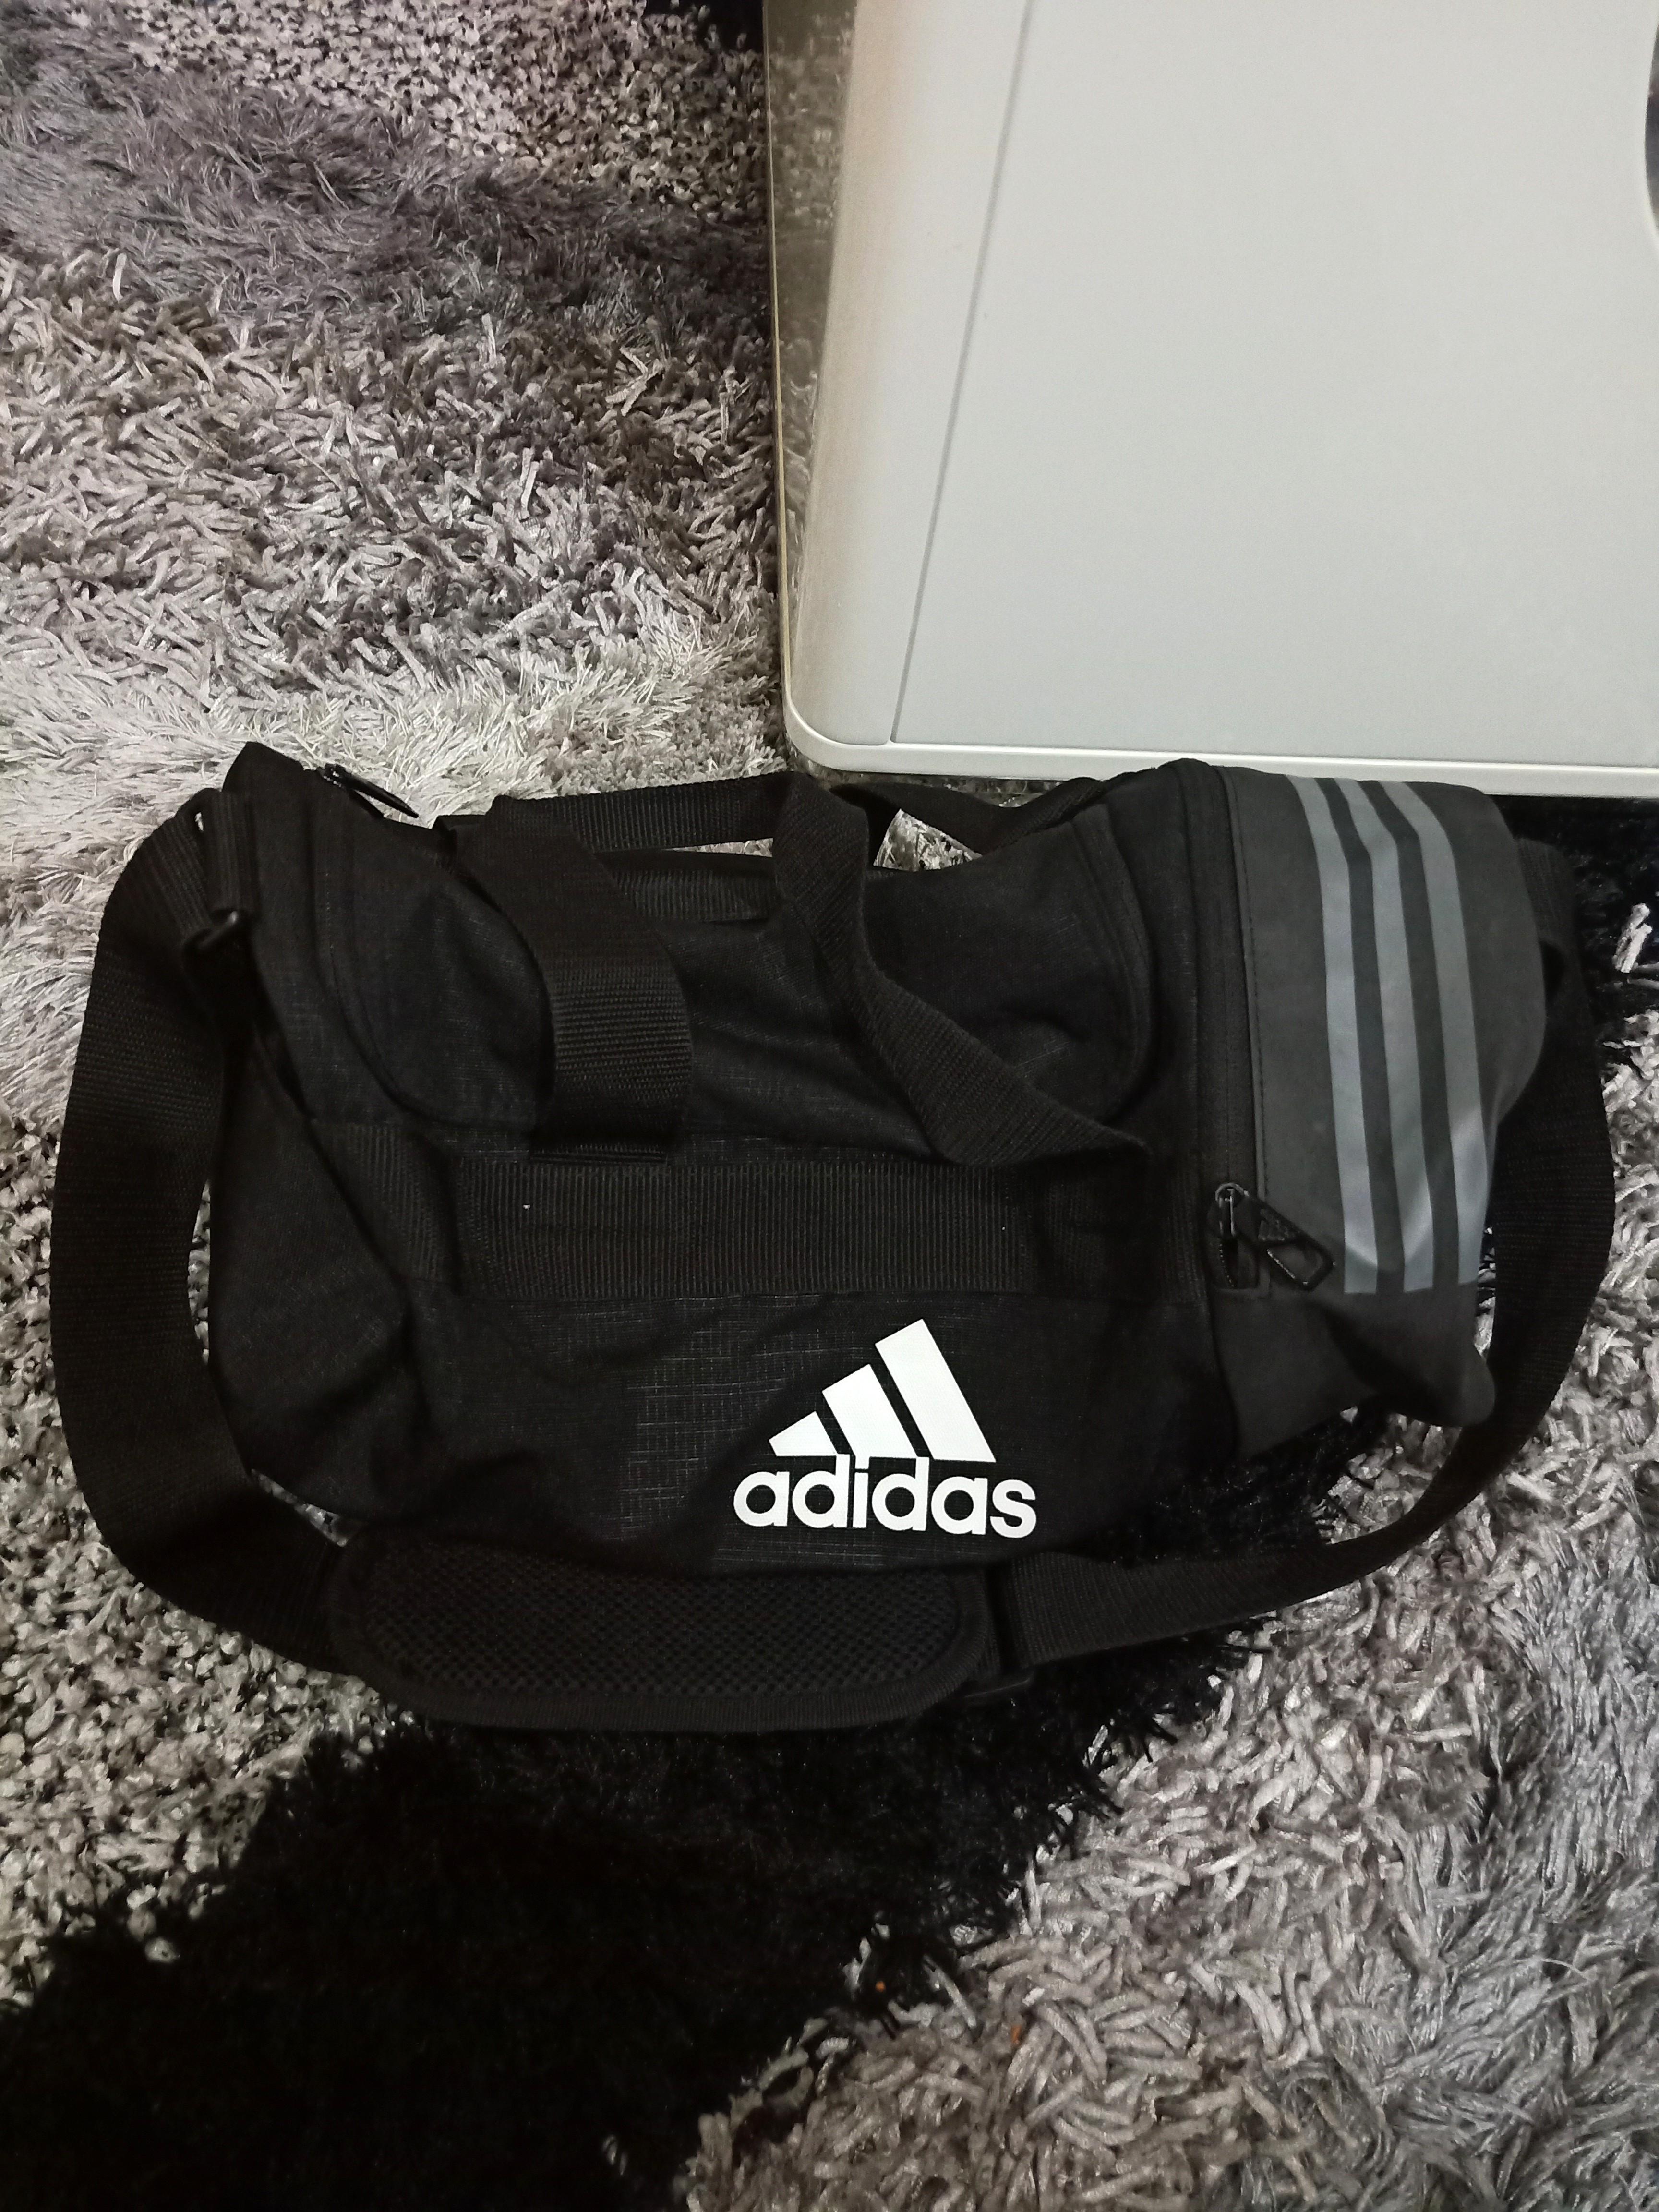 adidas convertible 3 stripes duffel bag s black